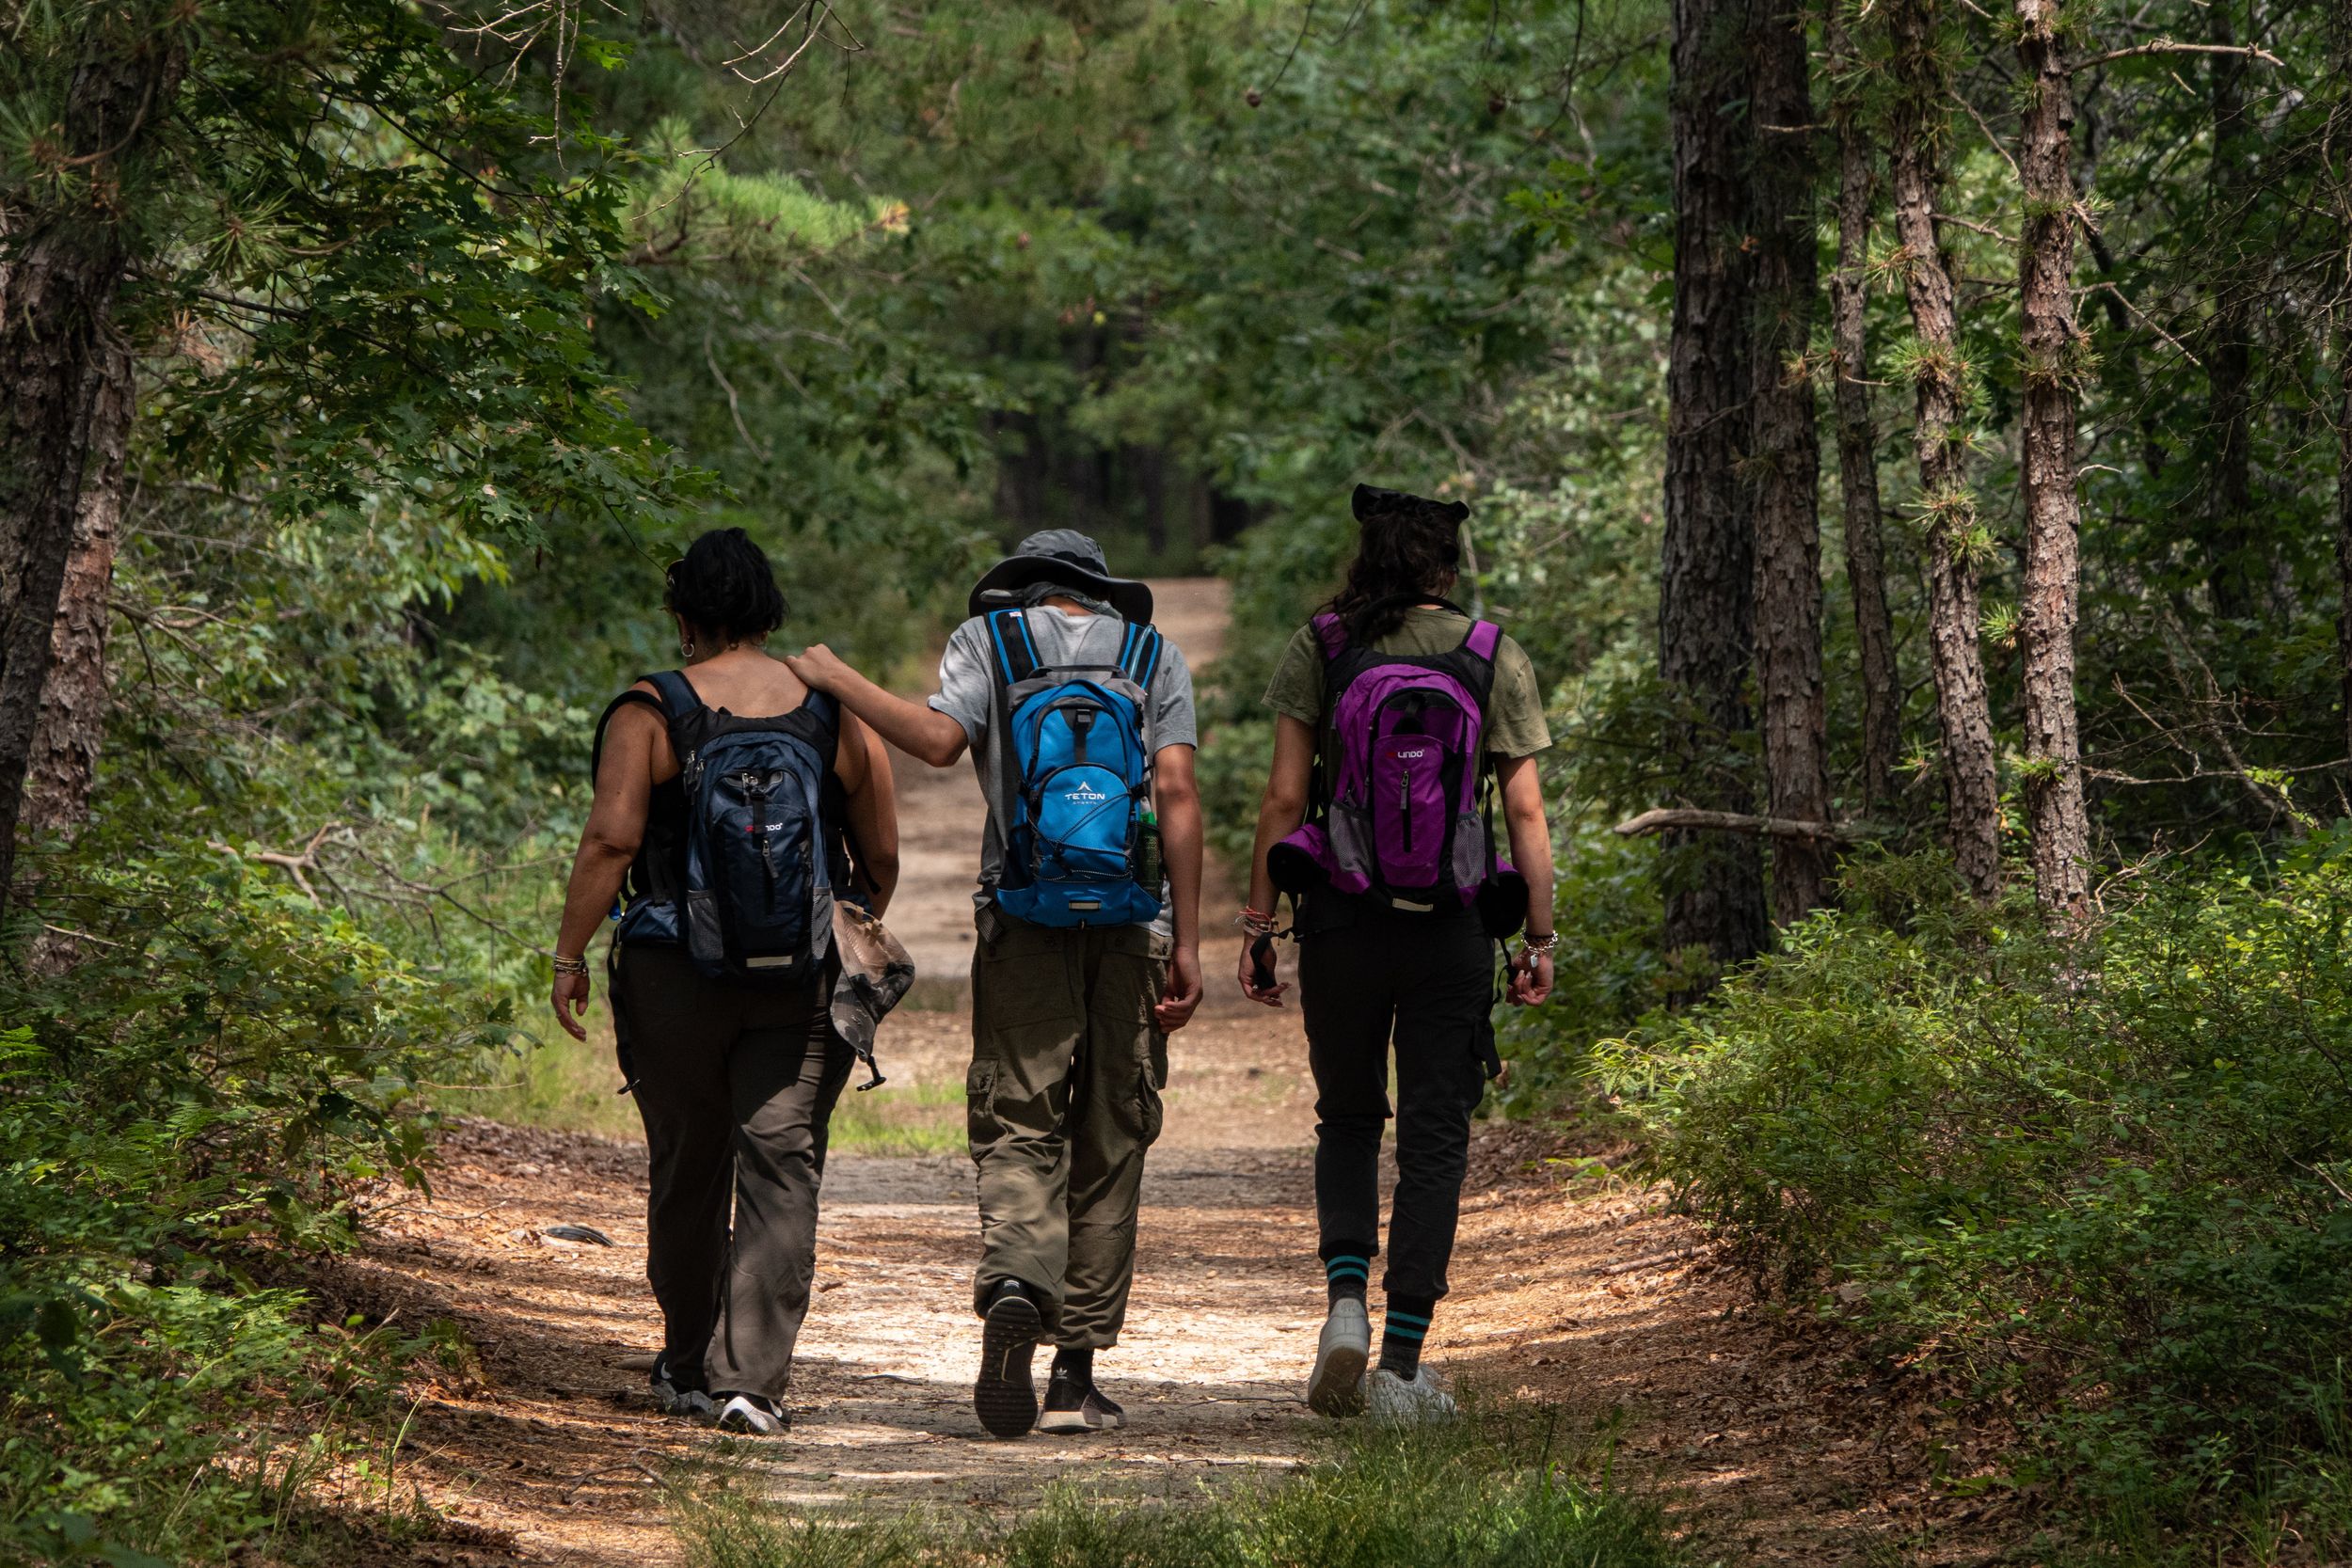 Group of three people walk down hiking trail